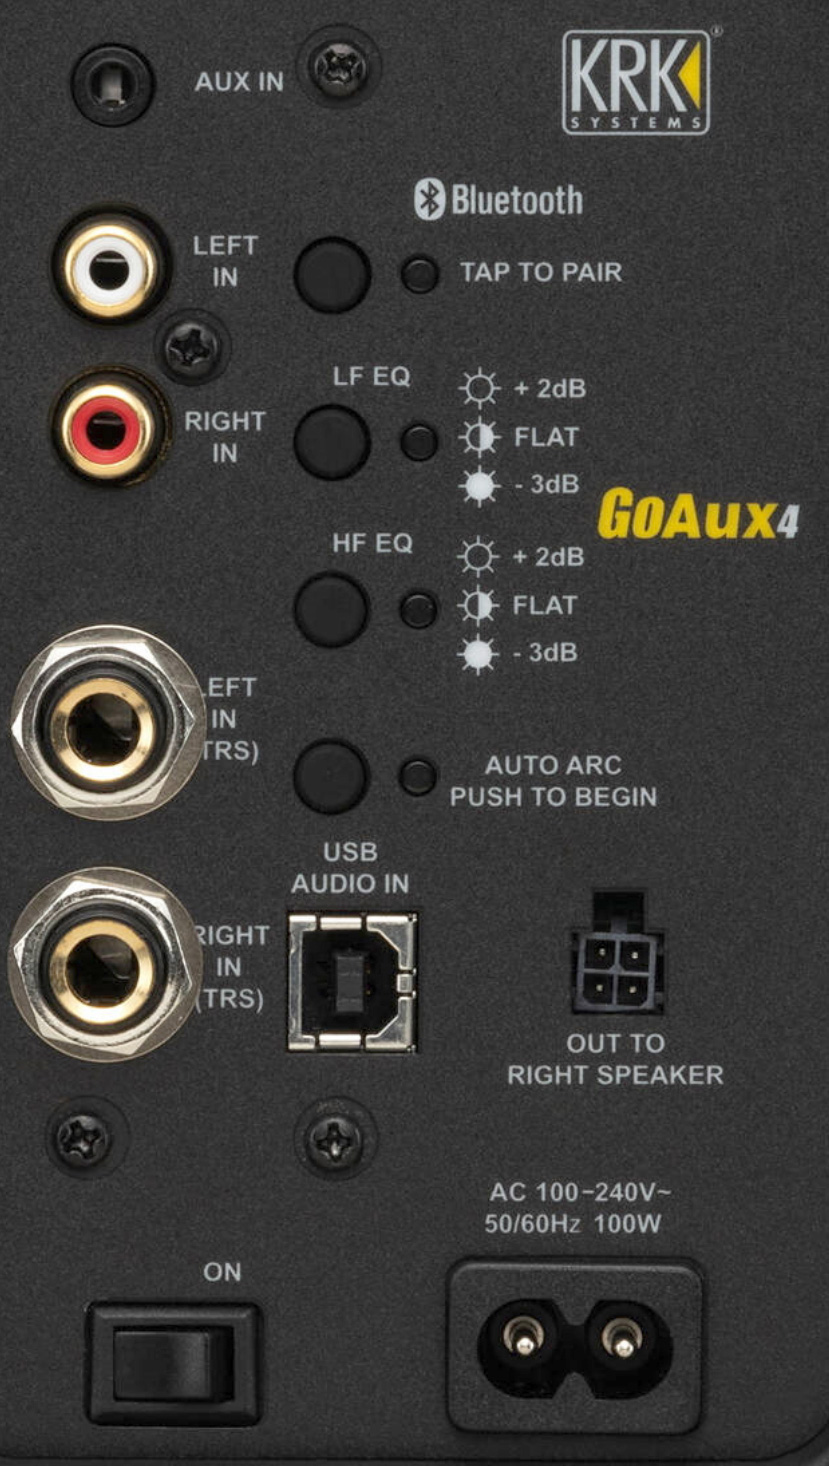 KRK GoAux4 rear active panel zoom inputs